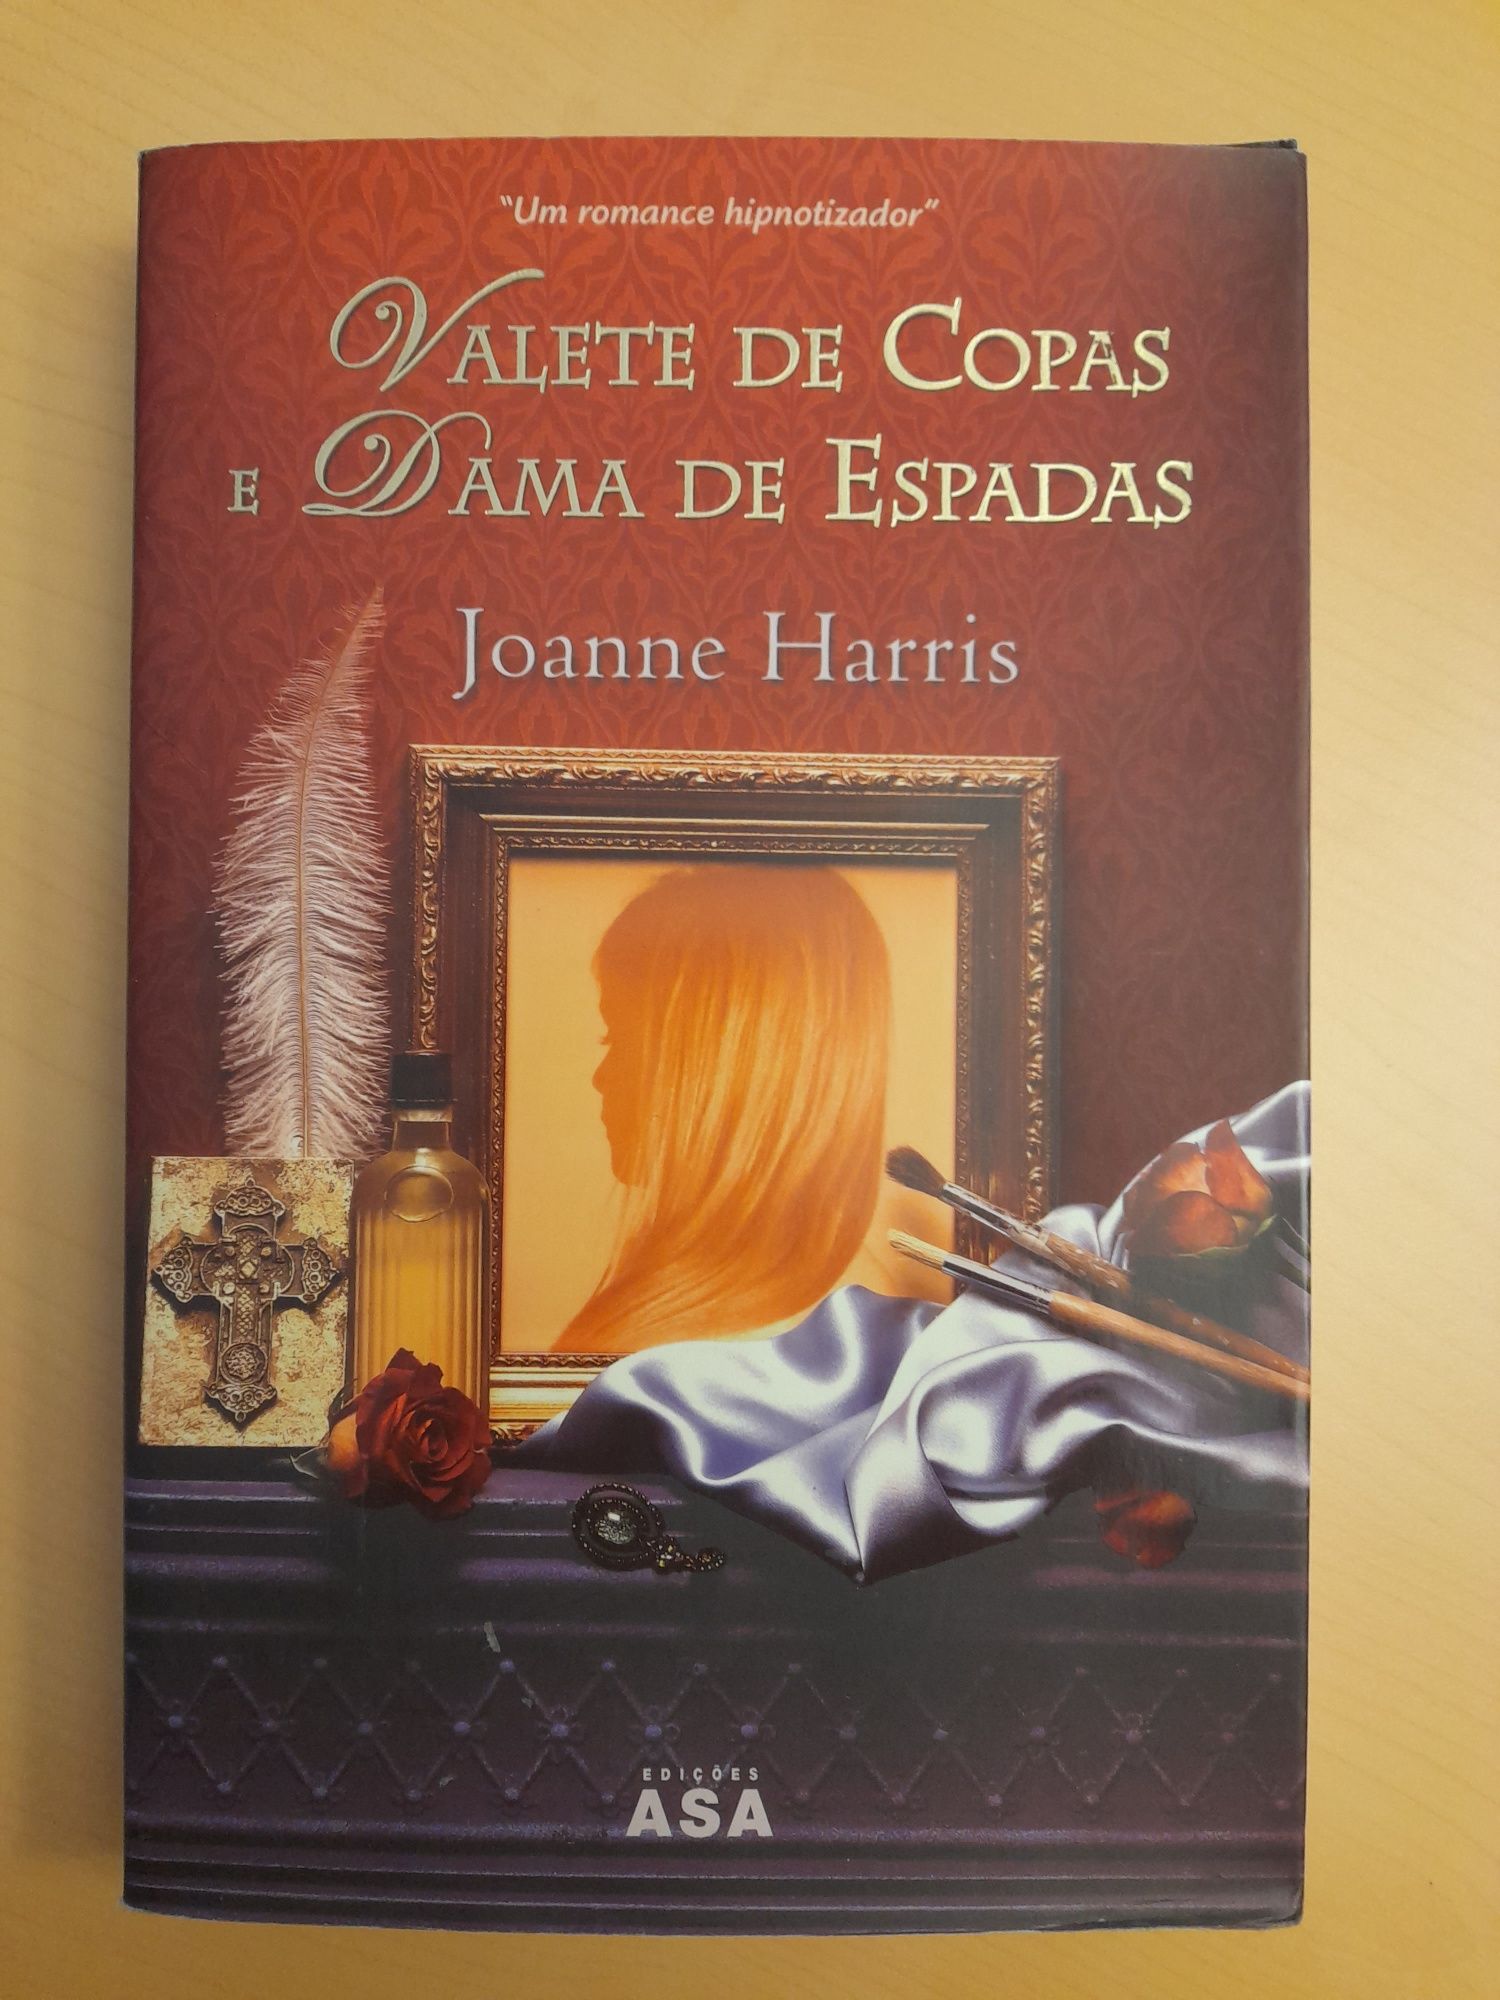 Livro "Valete de Copas e Dama de Espadas", de Joanne Harris